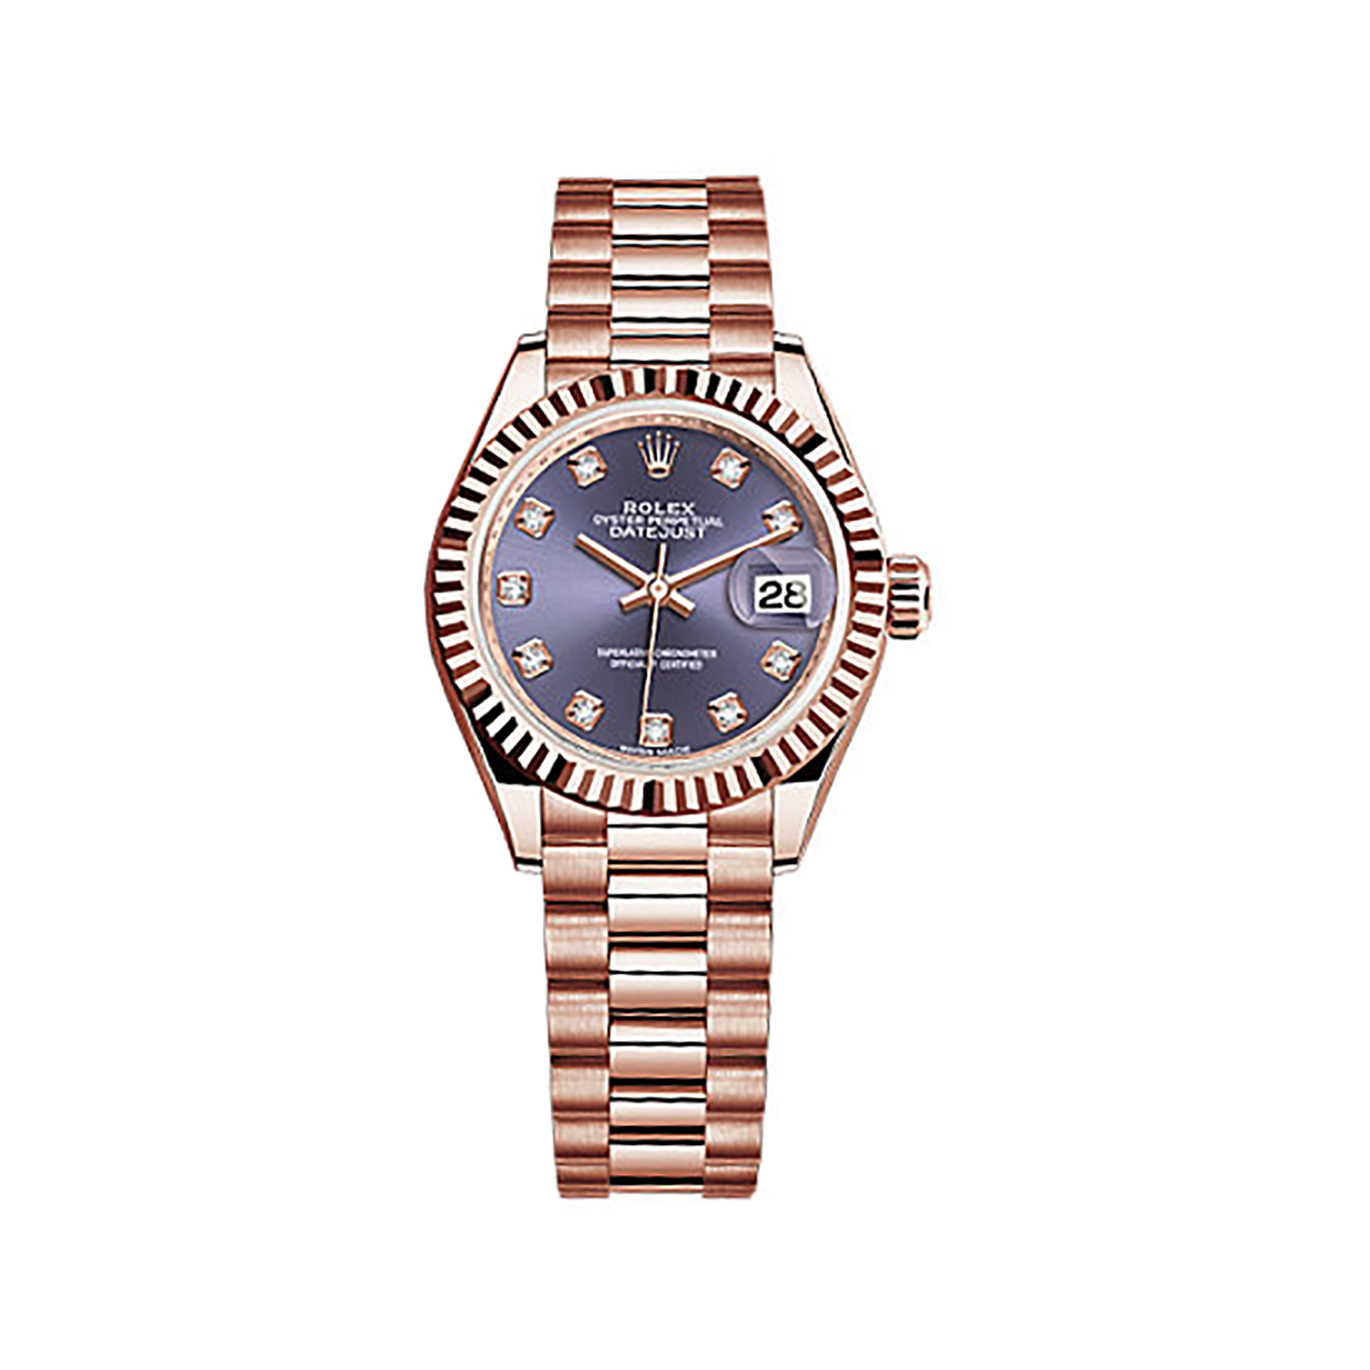 Lady-Datejust 28 279175 Rose Gold Watch (Aubergine Set with Diamonds)